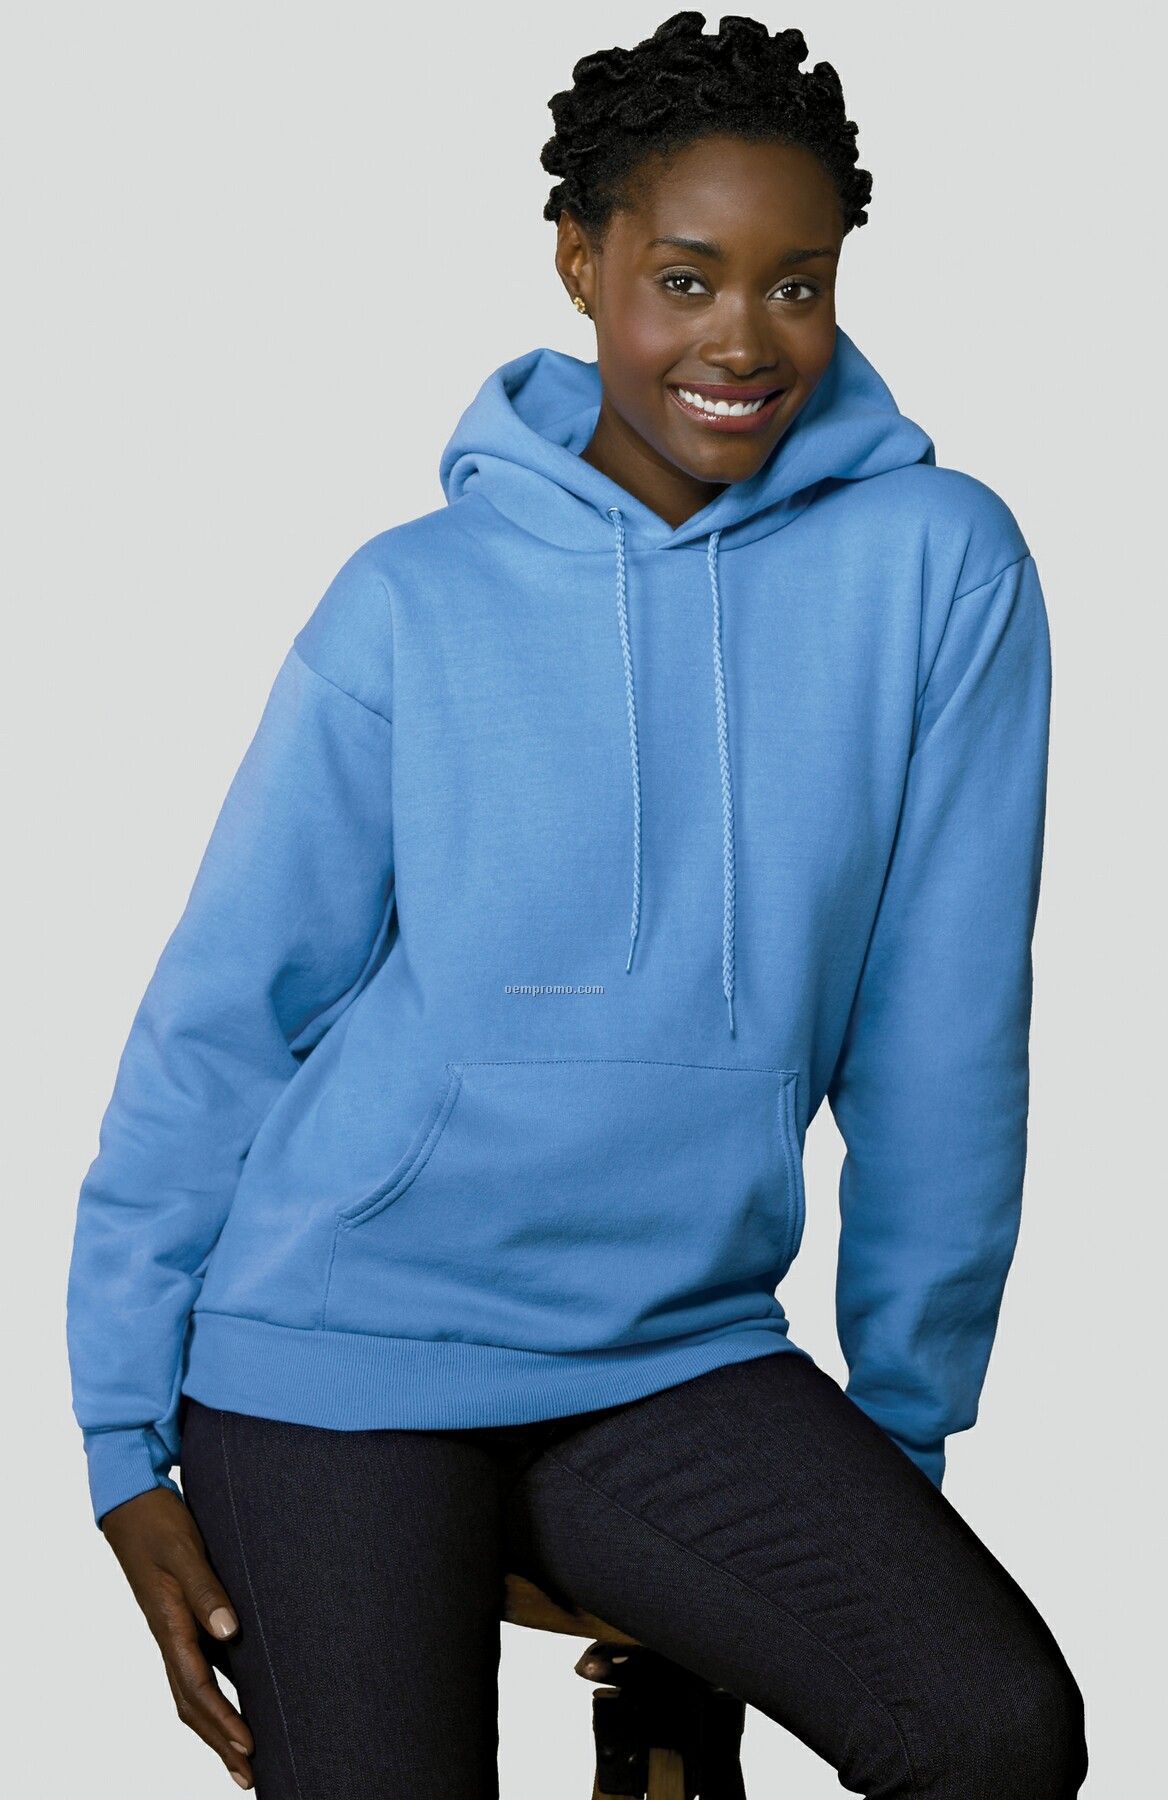 Hanes Comfortblend Pullover Hooded Sweatshirt - Heathers